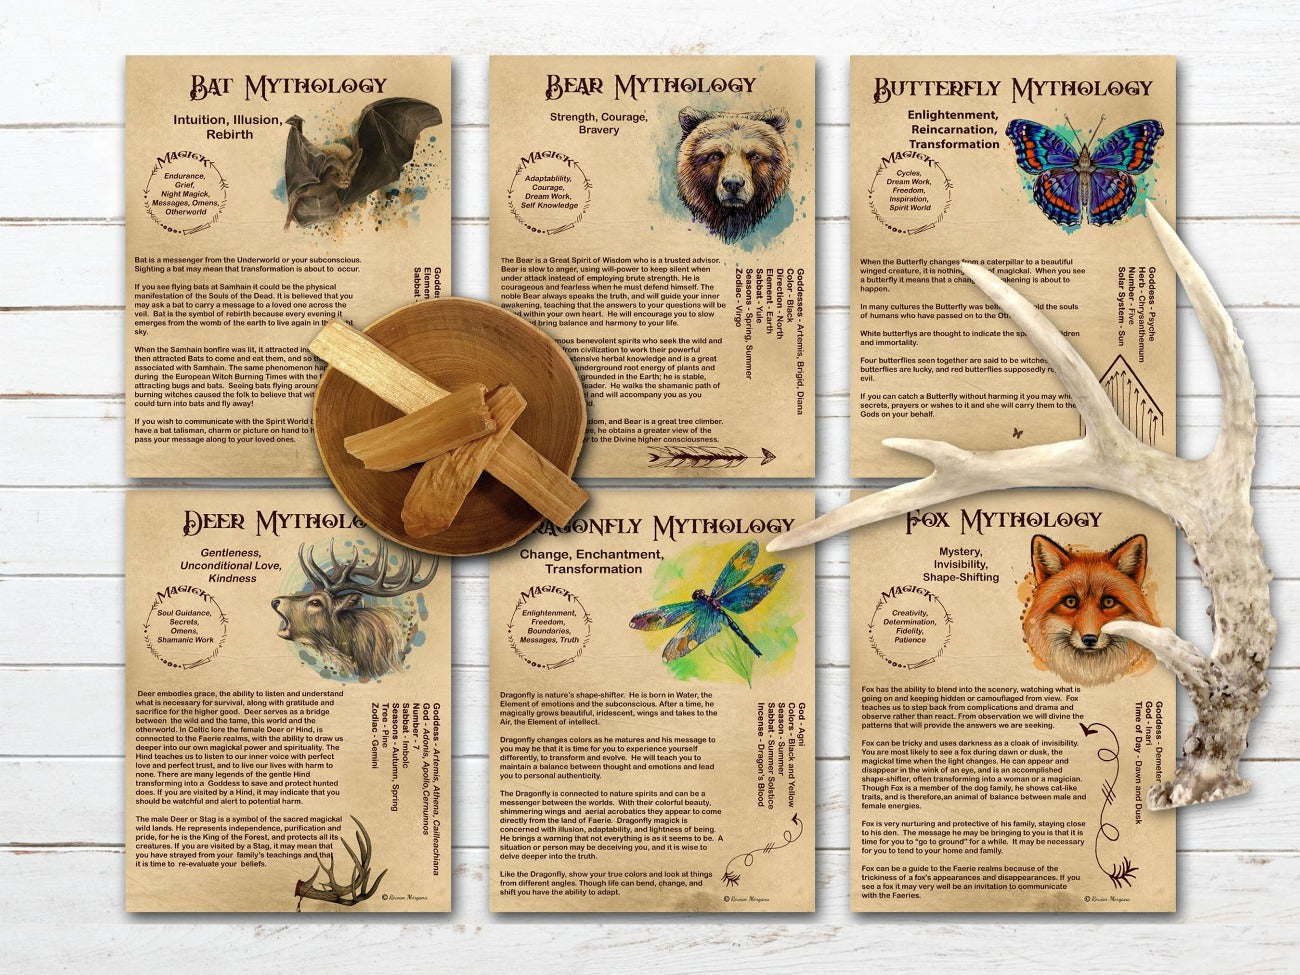 Bat Mythology page featuring a bat image and text describing Bat magick, lore and correspondences.